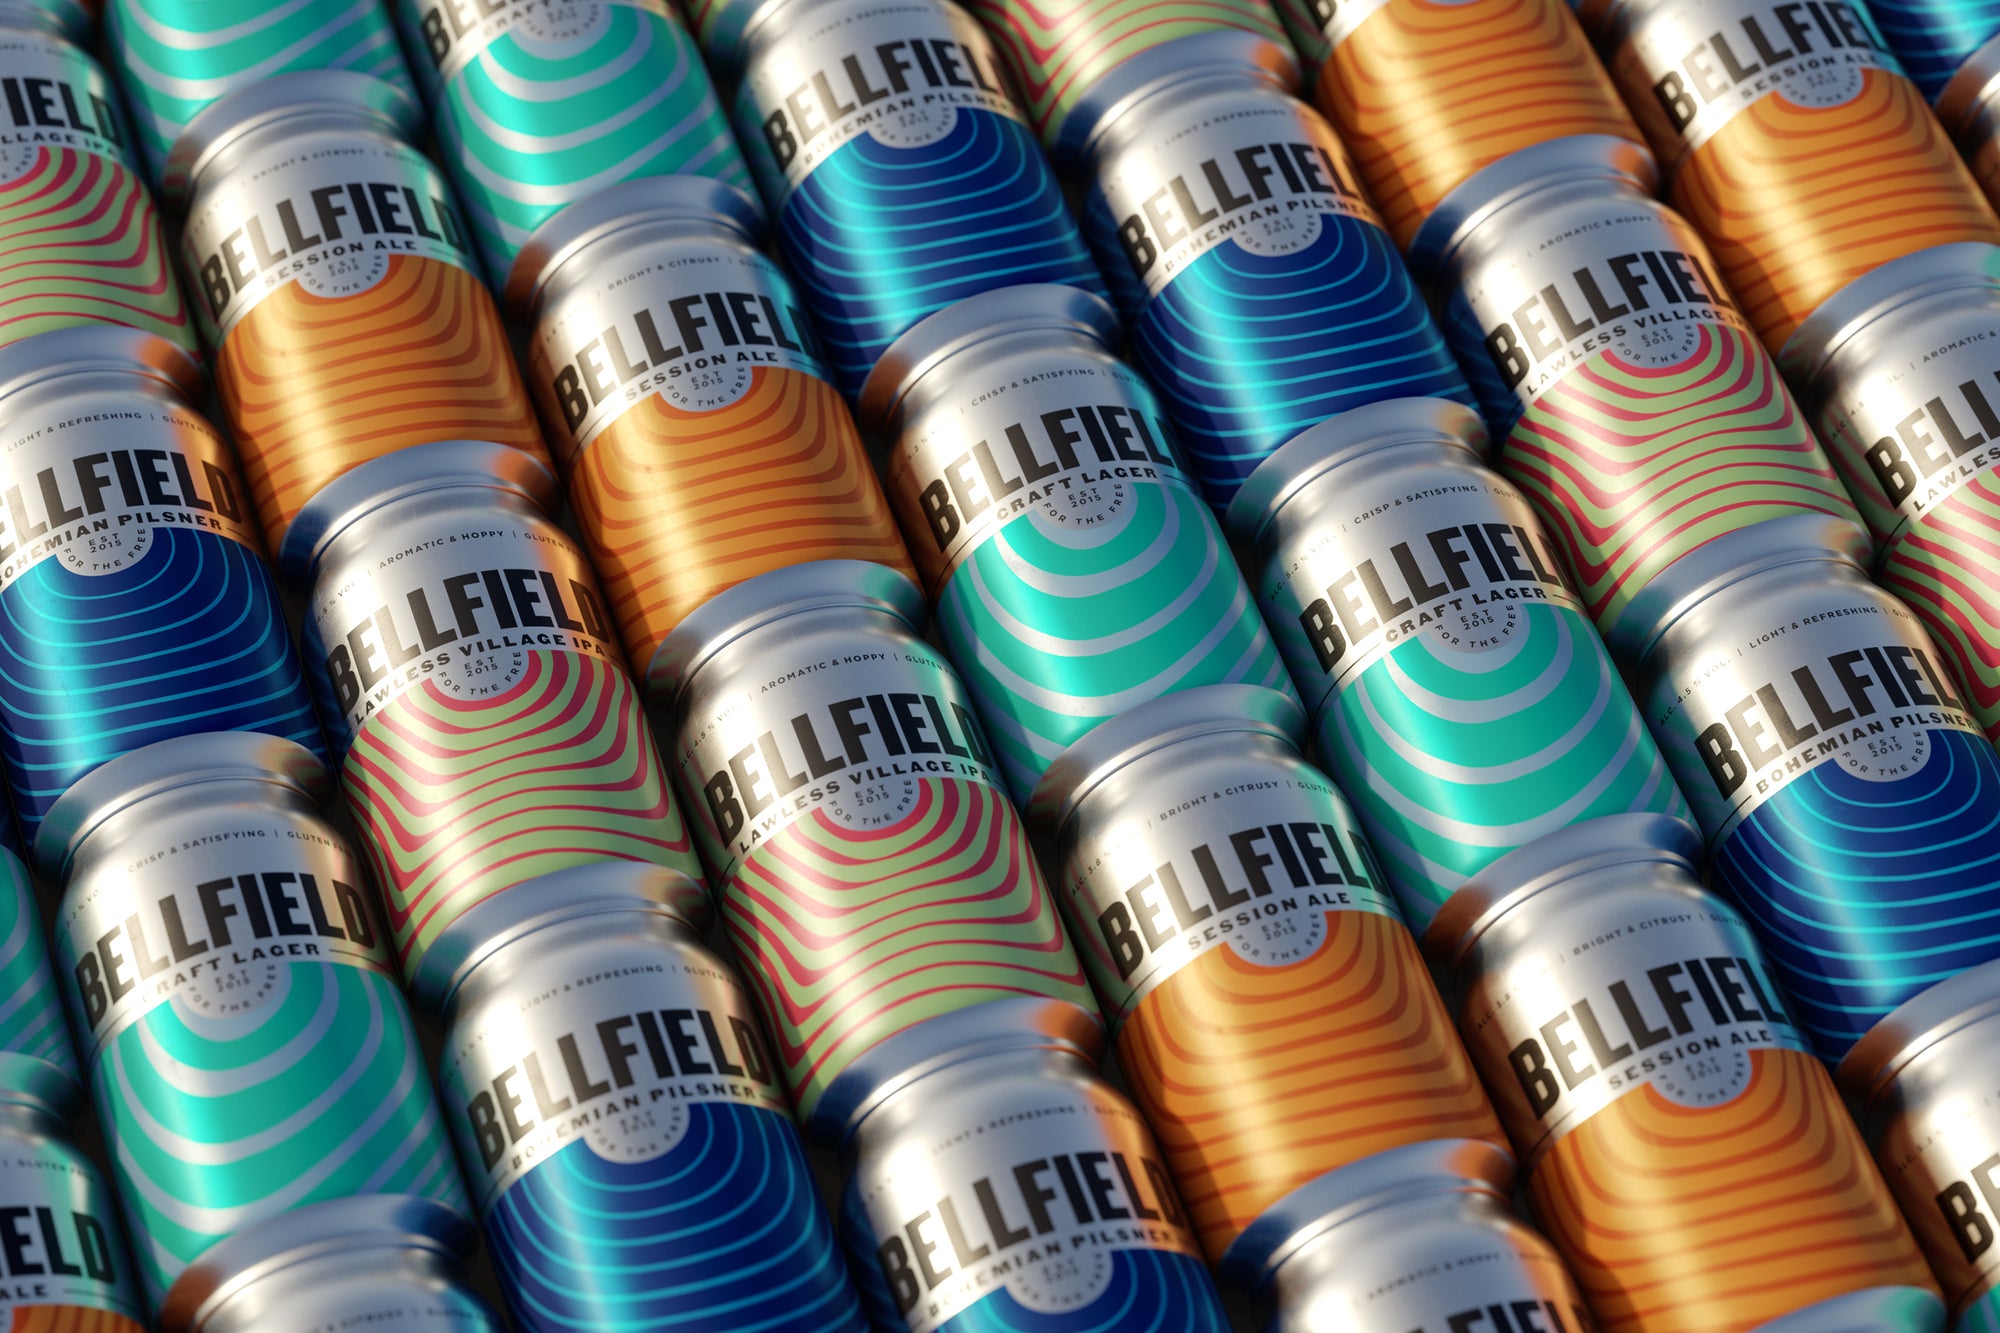 cans of Bellfield beers